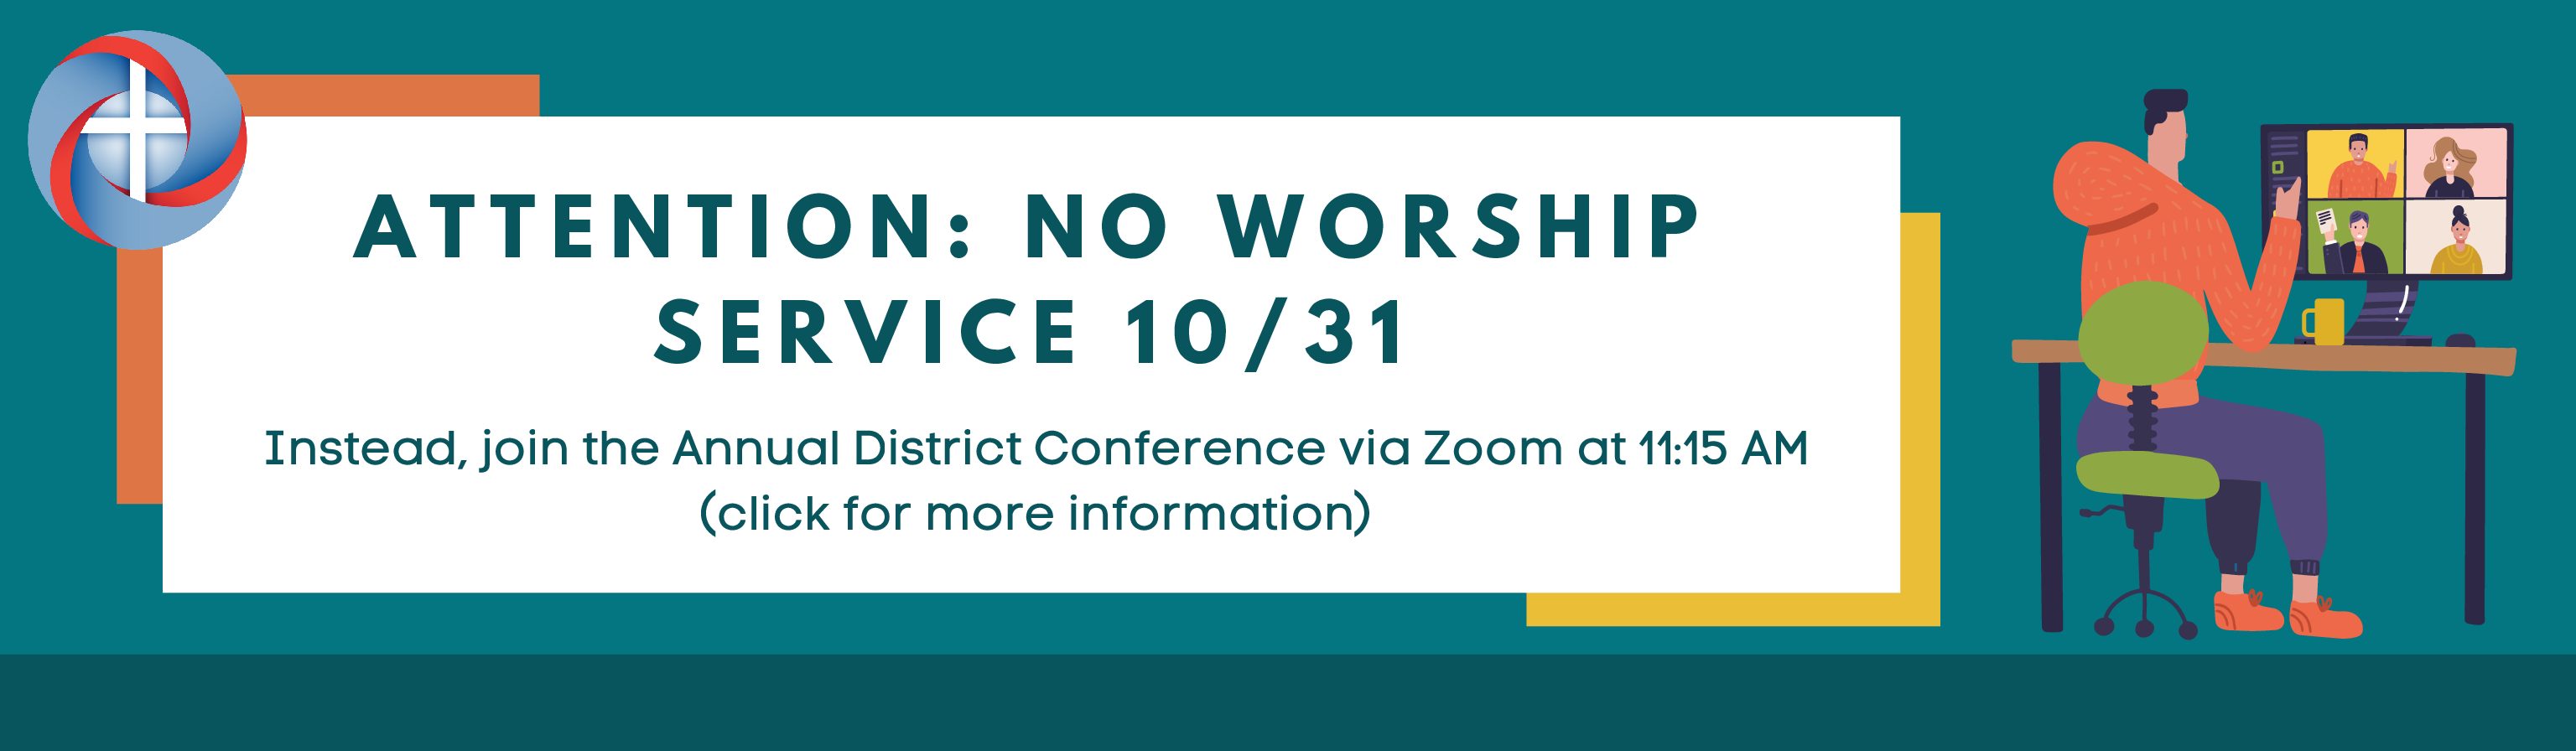 No Worship Banner 11 am (1)